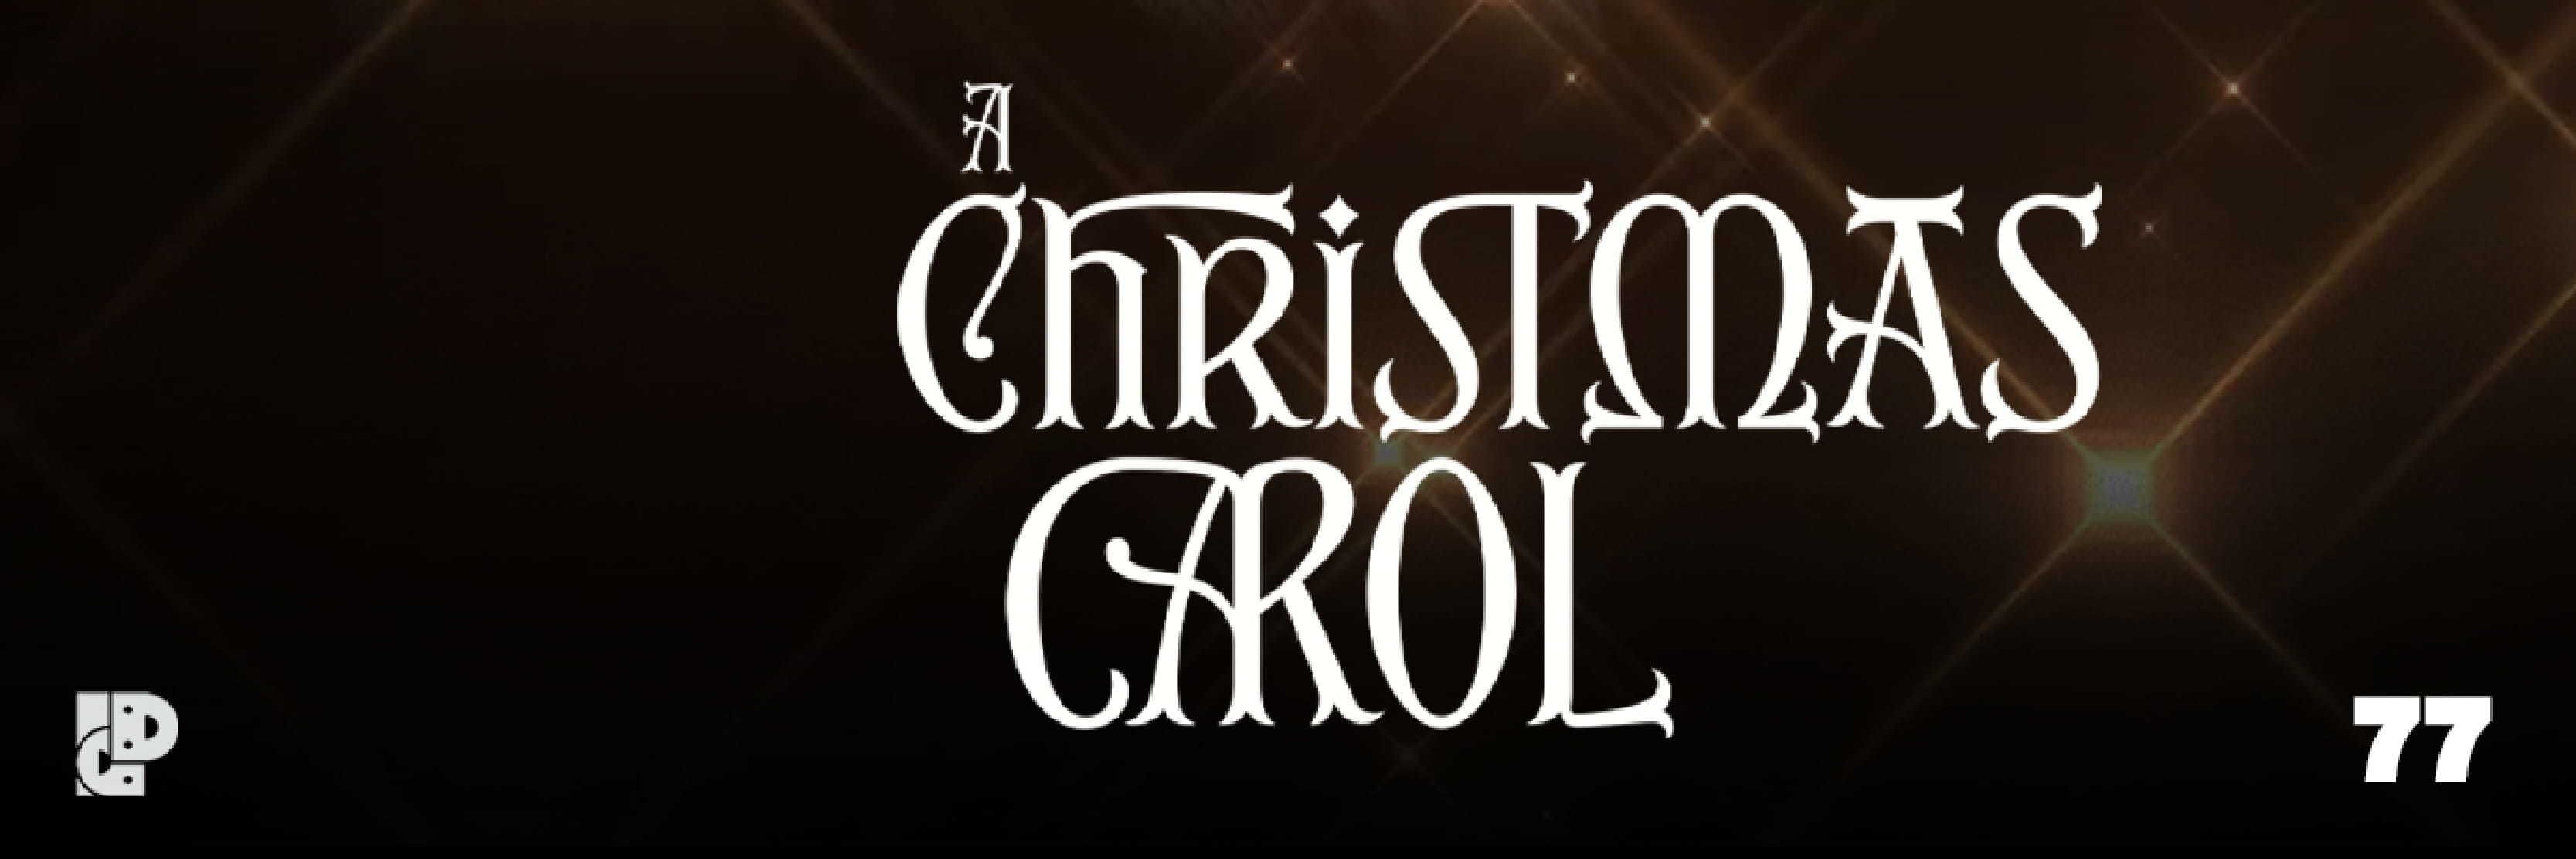 A Christmas Carol Starring Dick Terhune